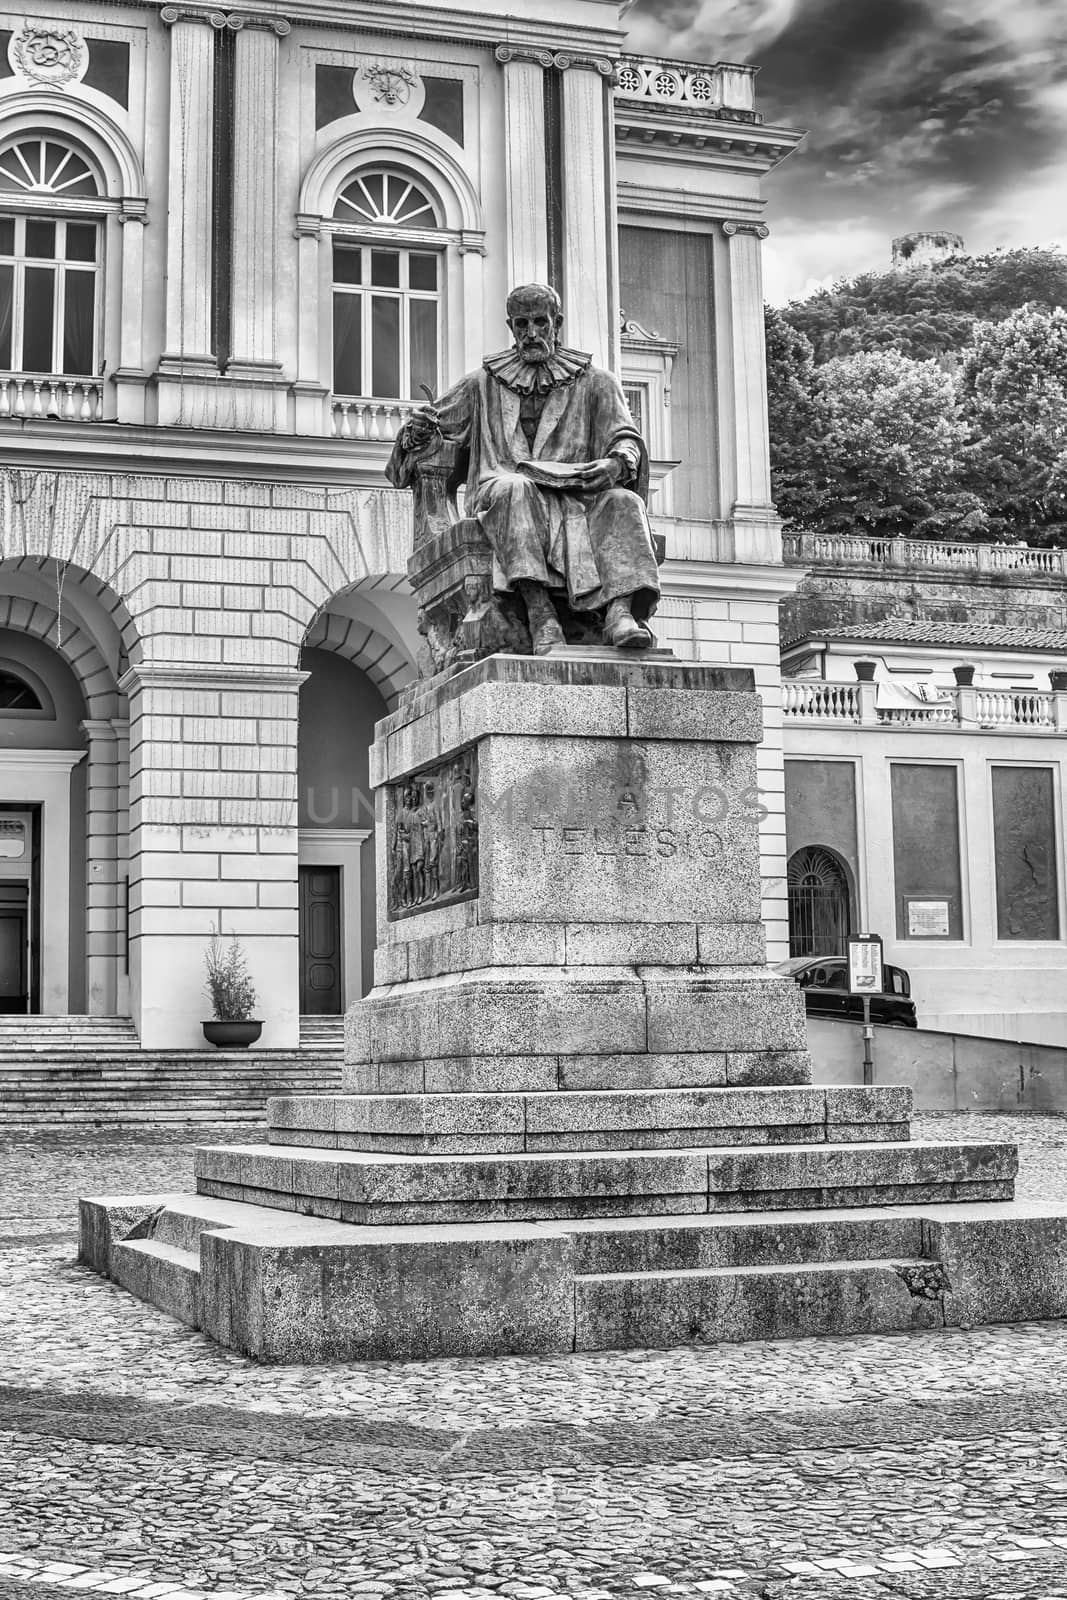 The statue of Bernardino Telesio, Old town of Cosenza, Italy by marcorubino